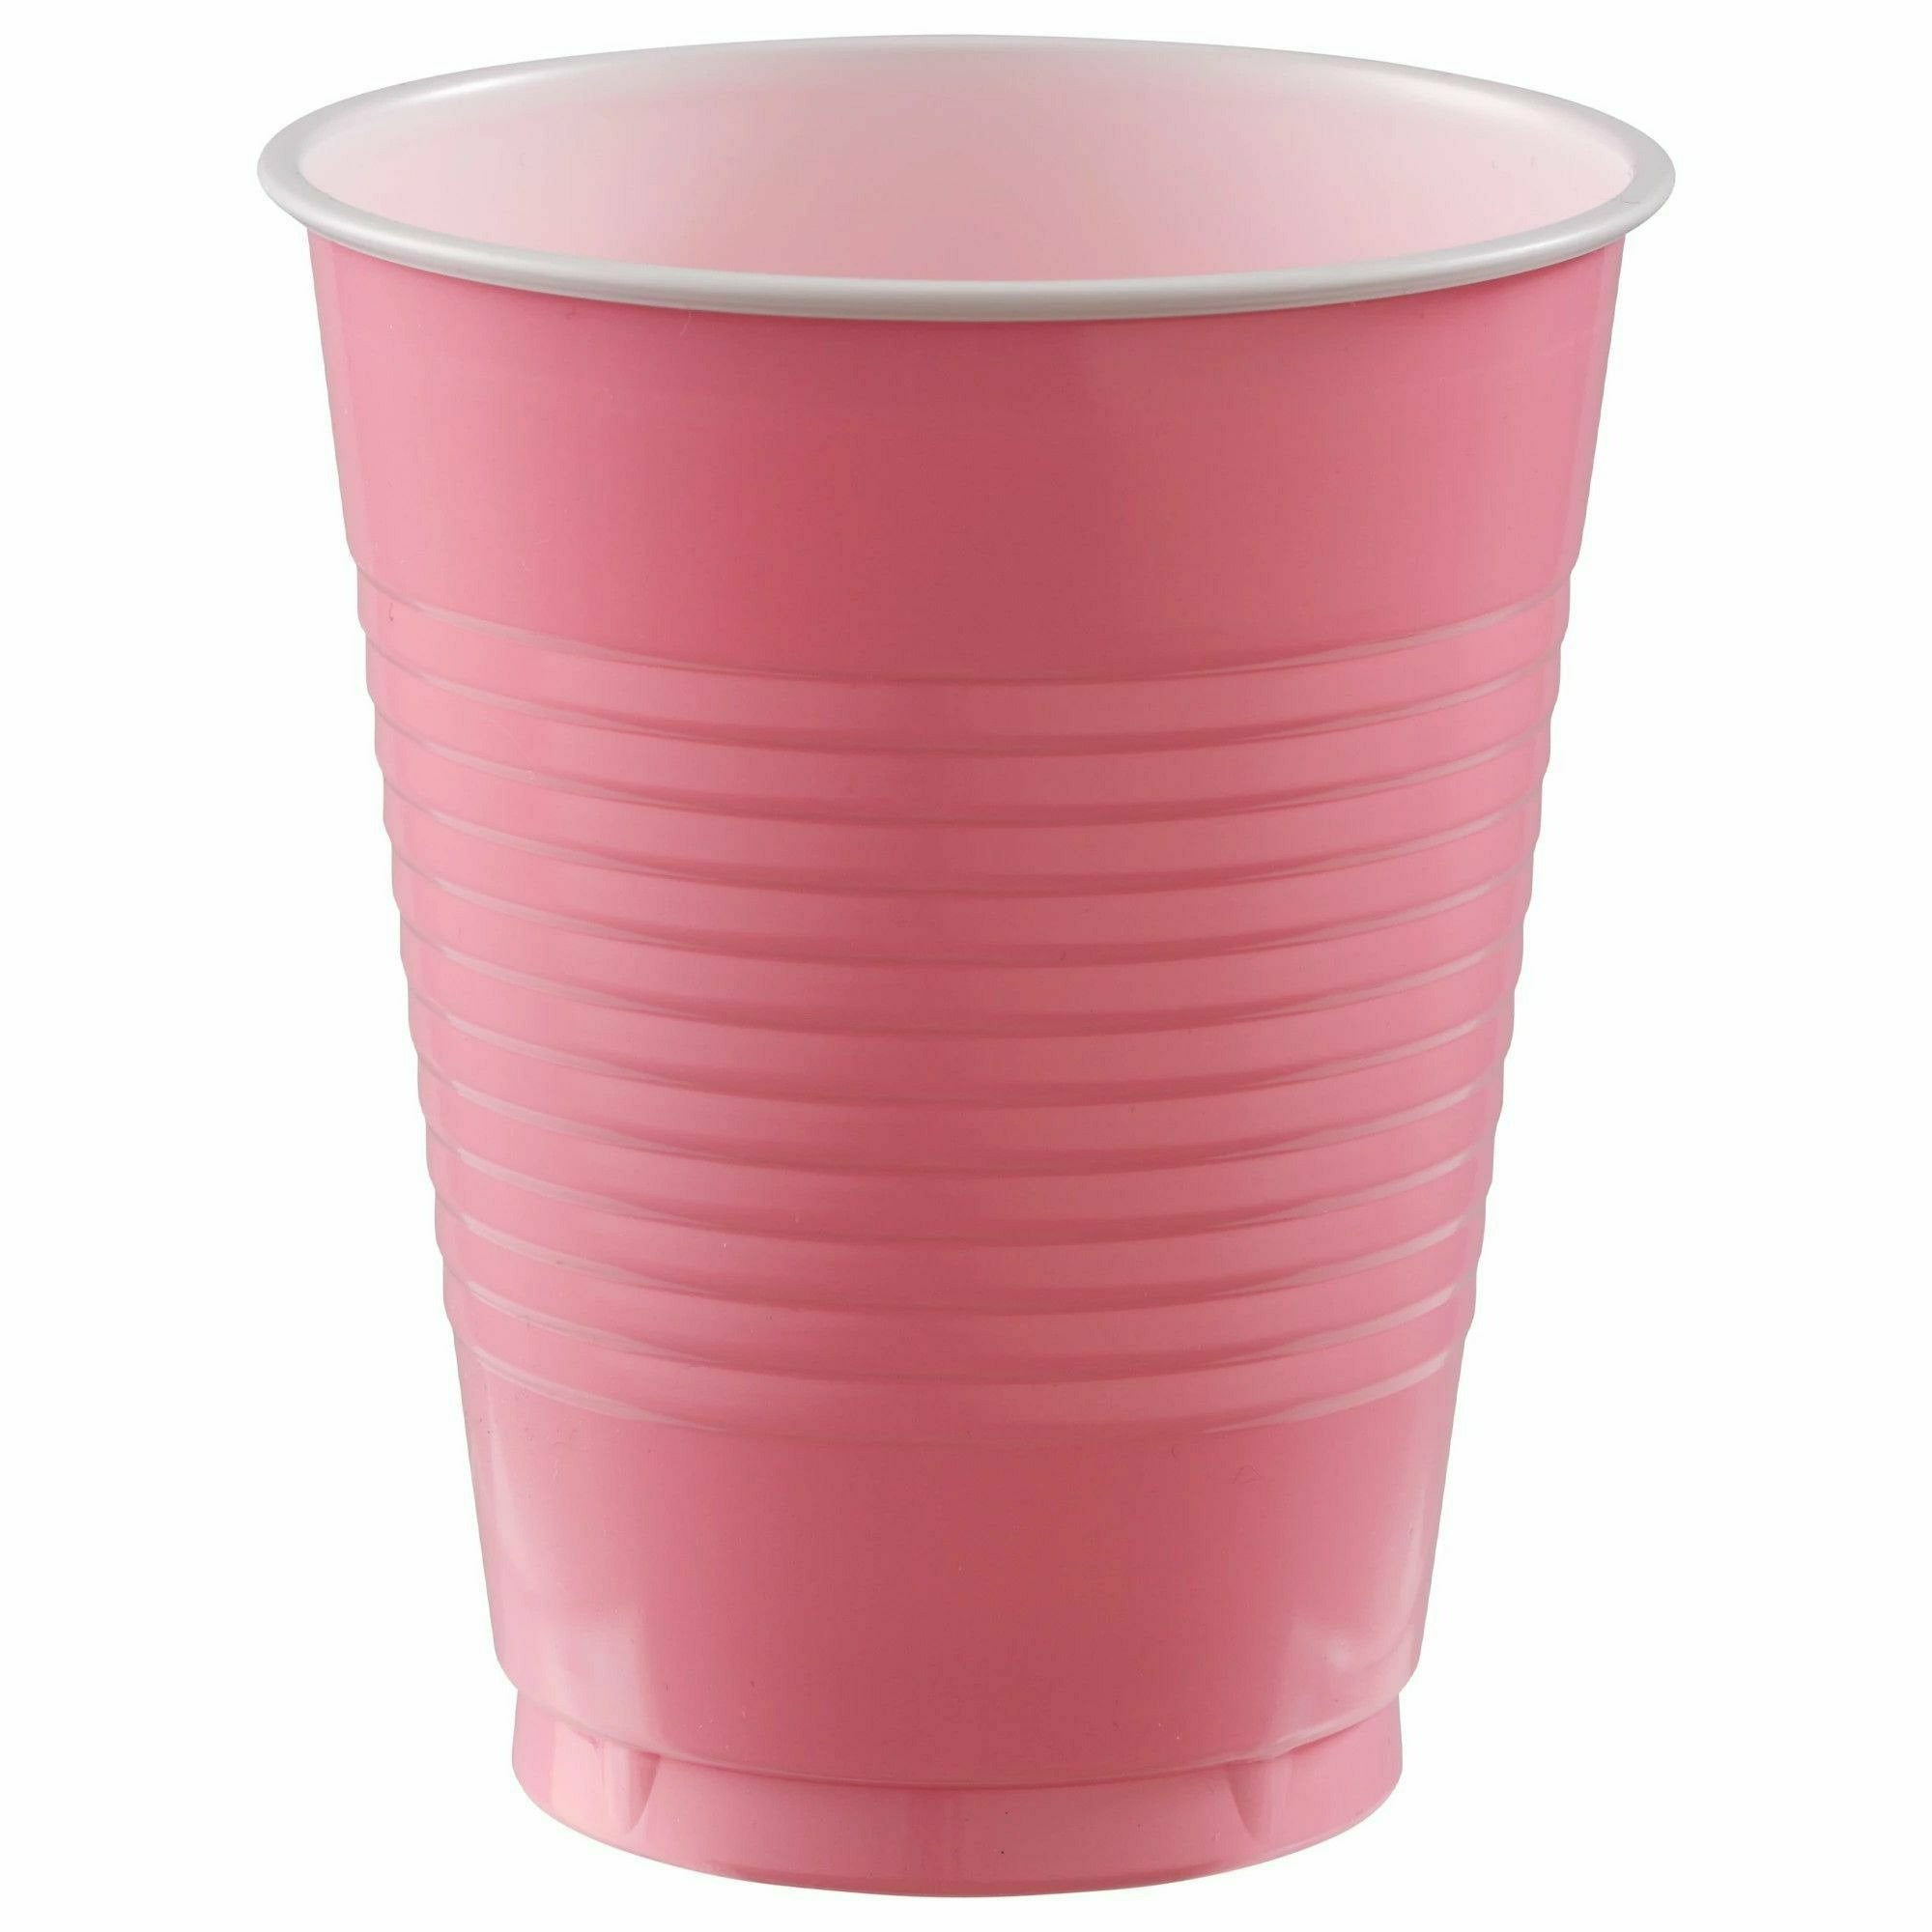 Amscan BASIC New Pink - 18 oz. Plastic Cups, 50 Ct.